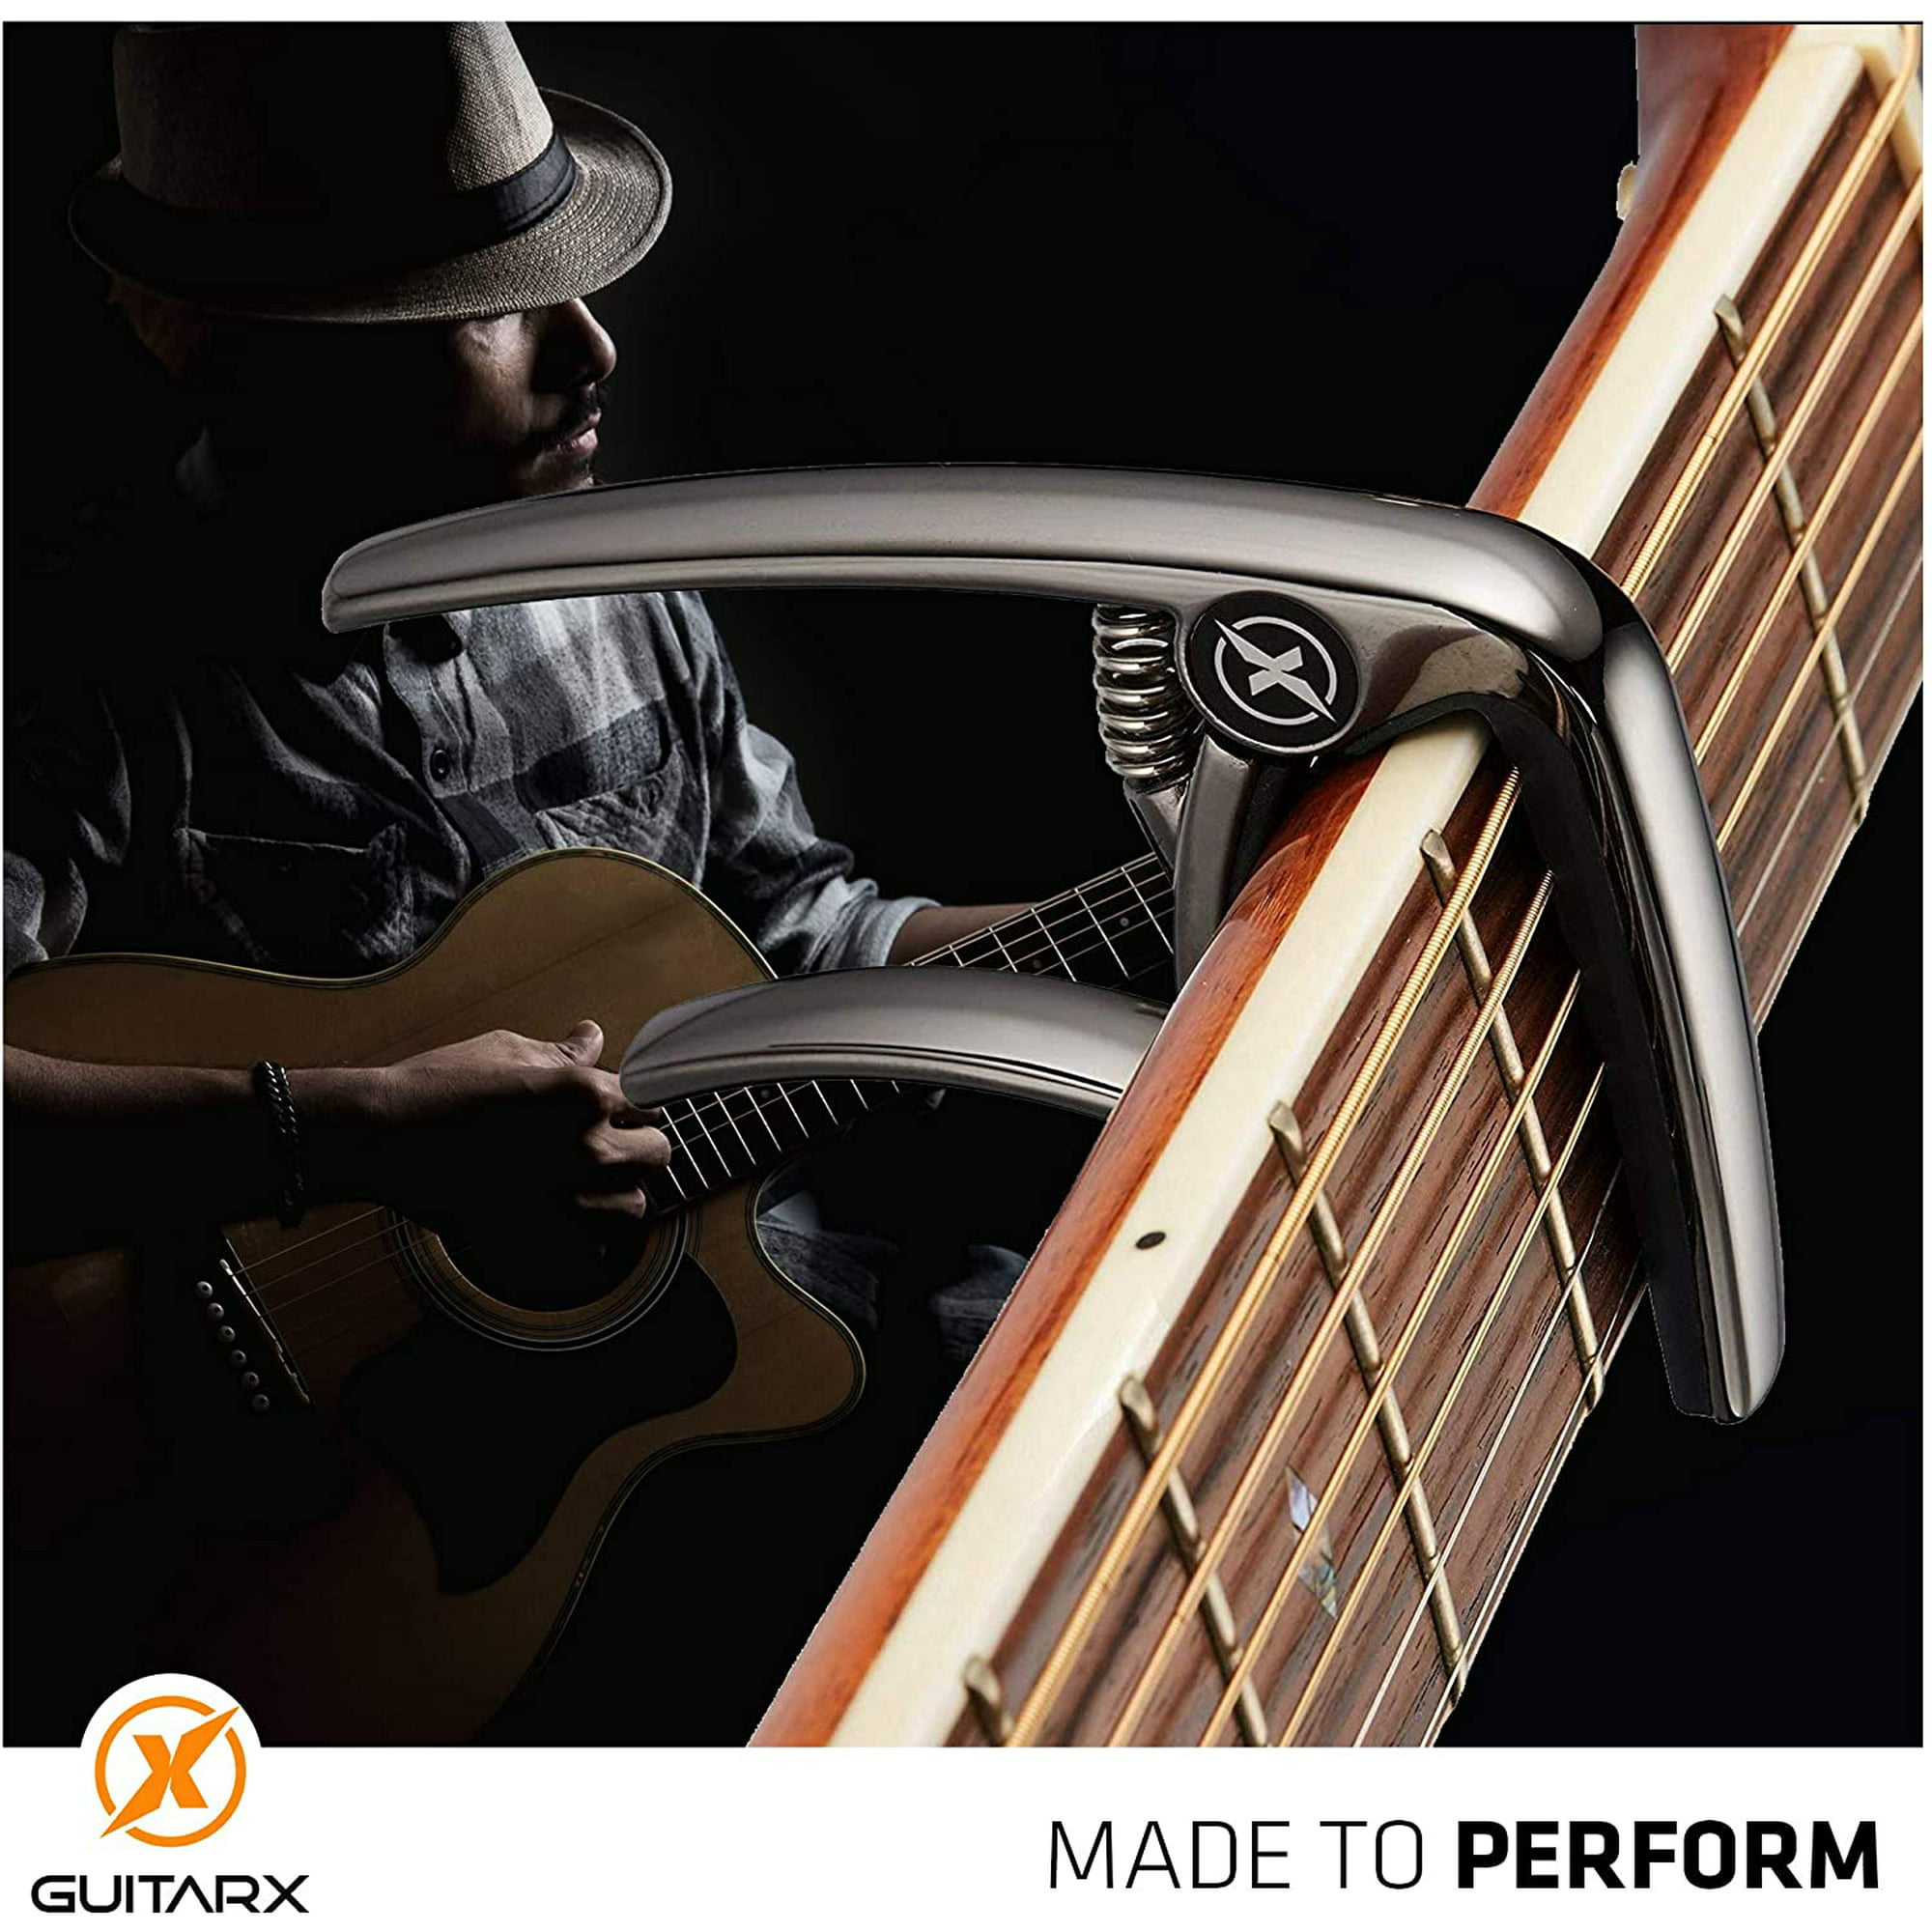 GUITARX X3 Banjo and Mandolin Chrome Ukulele The Original Guitar Capo for Acoustic and Electric Guitars